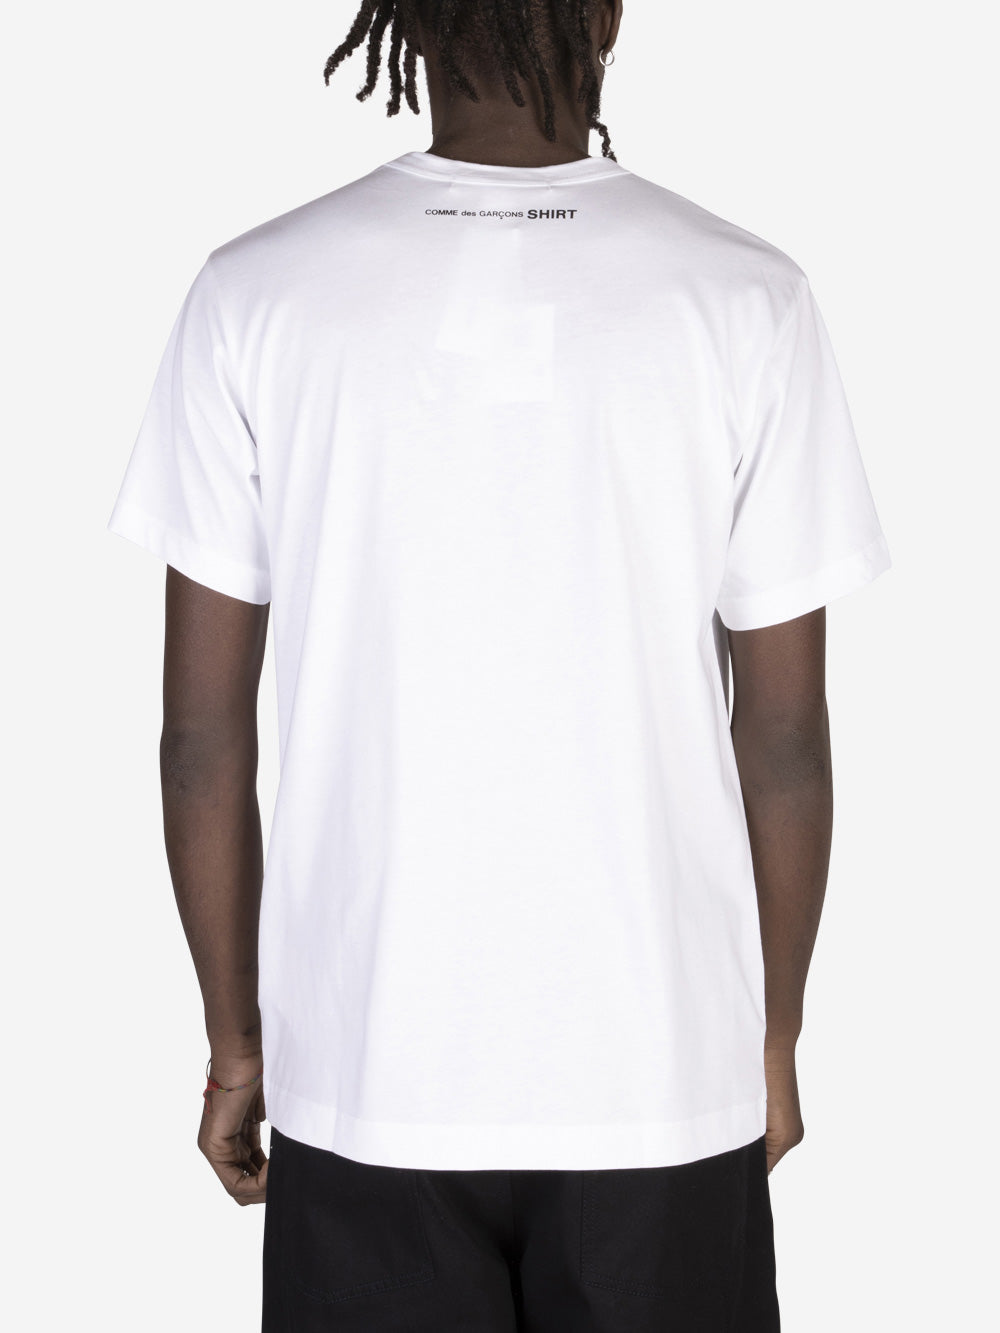 COMME DES GARCONS SHIRT T-shirt in cotone Urbanstaroma